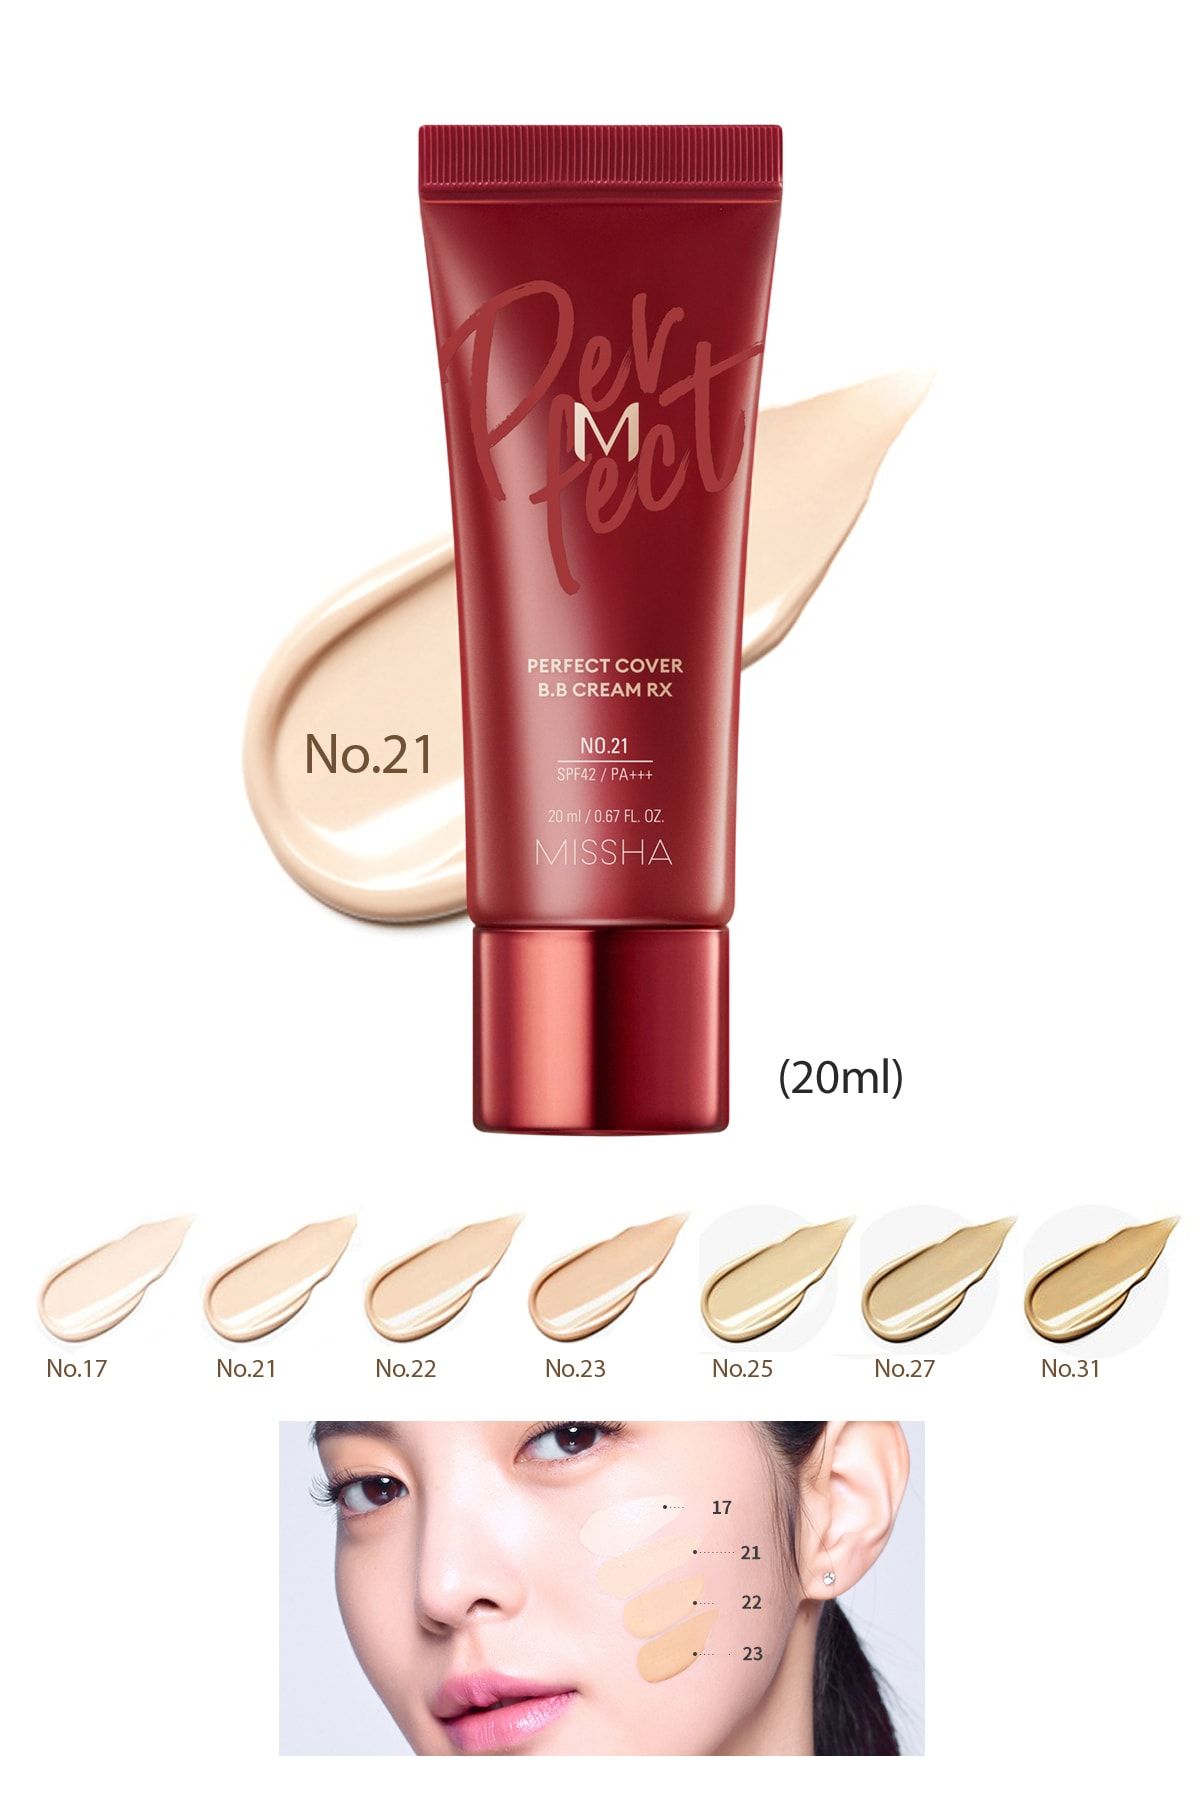 Missha Yüksek Kapatıcı Ve Cilt Bakım Etkili Yeni Nesil Bb Krem Spf42 M Perfect Cover Bb Cream Rx (NO.21)